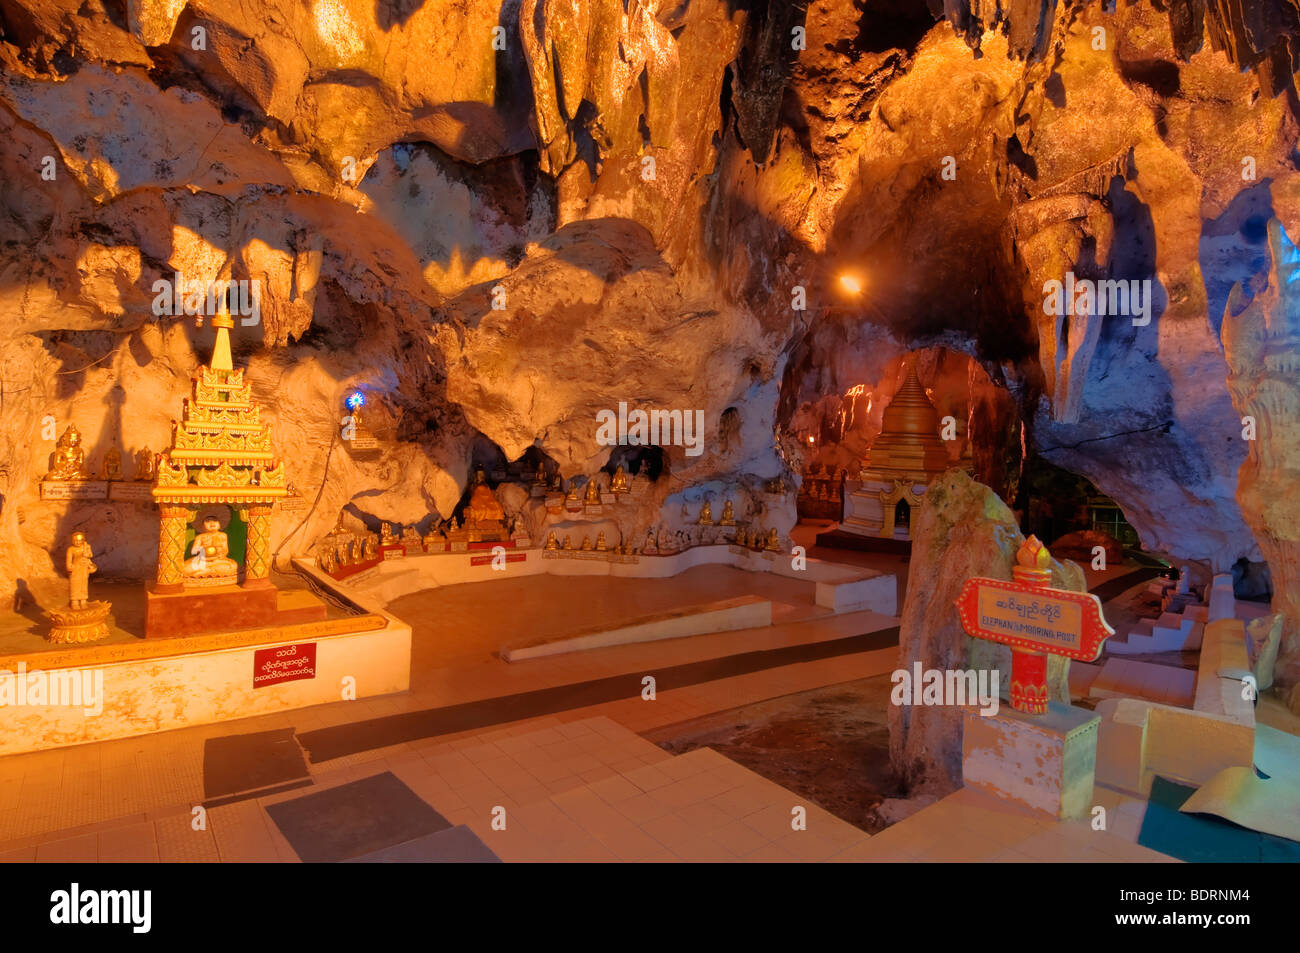 Santuari di Buddha nella grotta di Pindaya, dotato di incredibili caverne con oltre 8000 immagini di Buddha, Lago Inle Area, Stato Shan, Myanmar (Bur Foto Stock